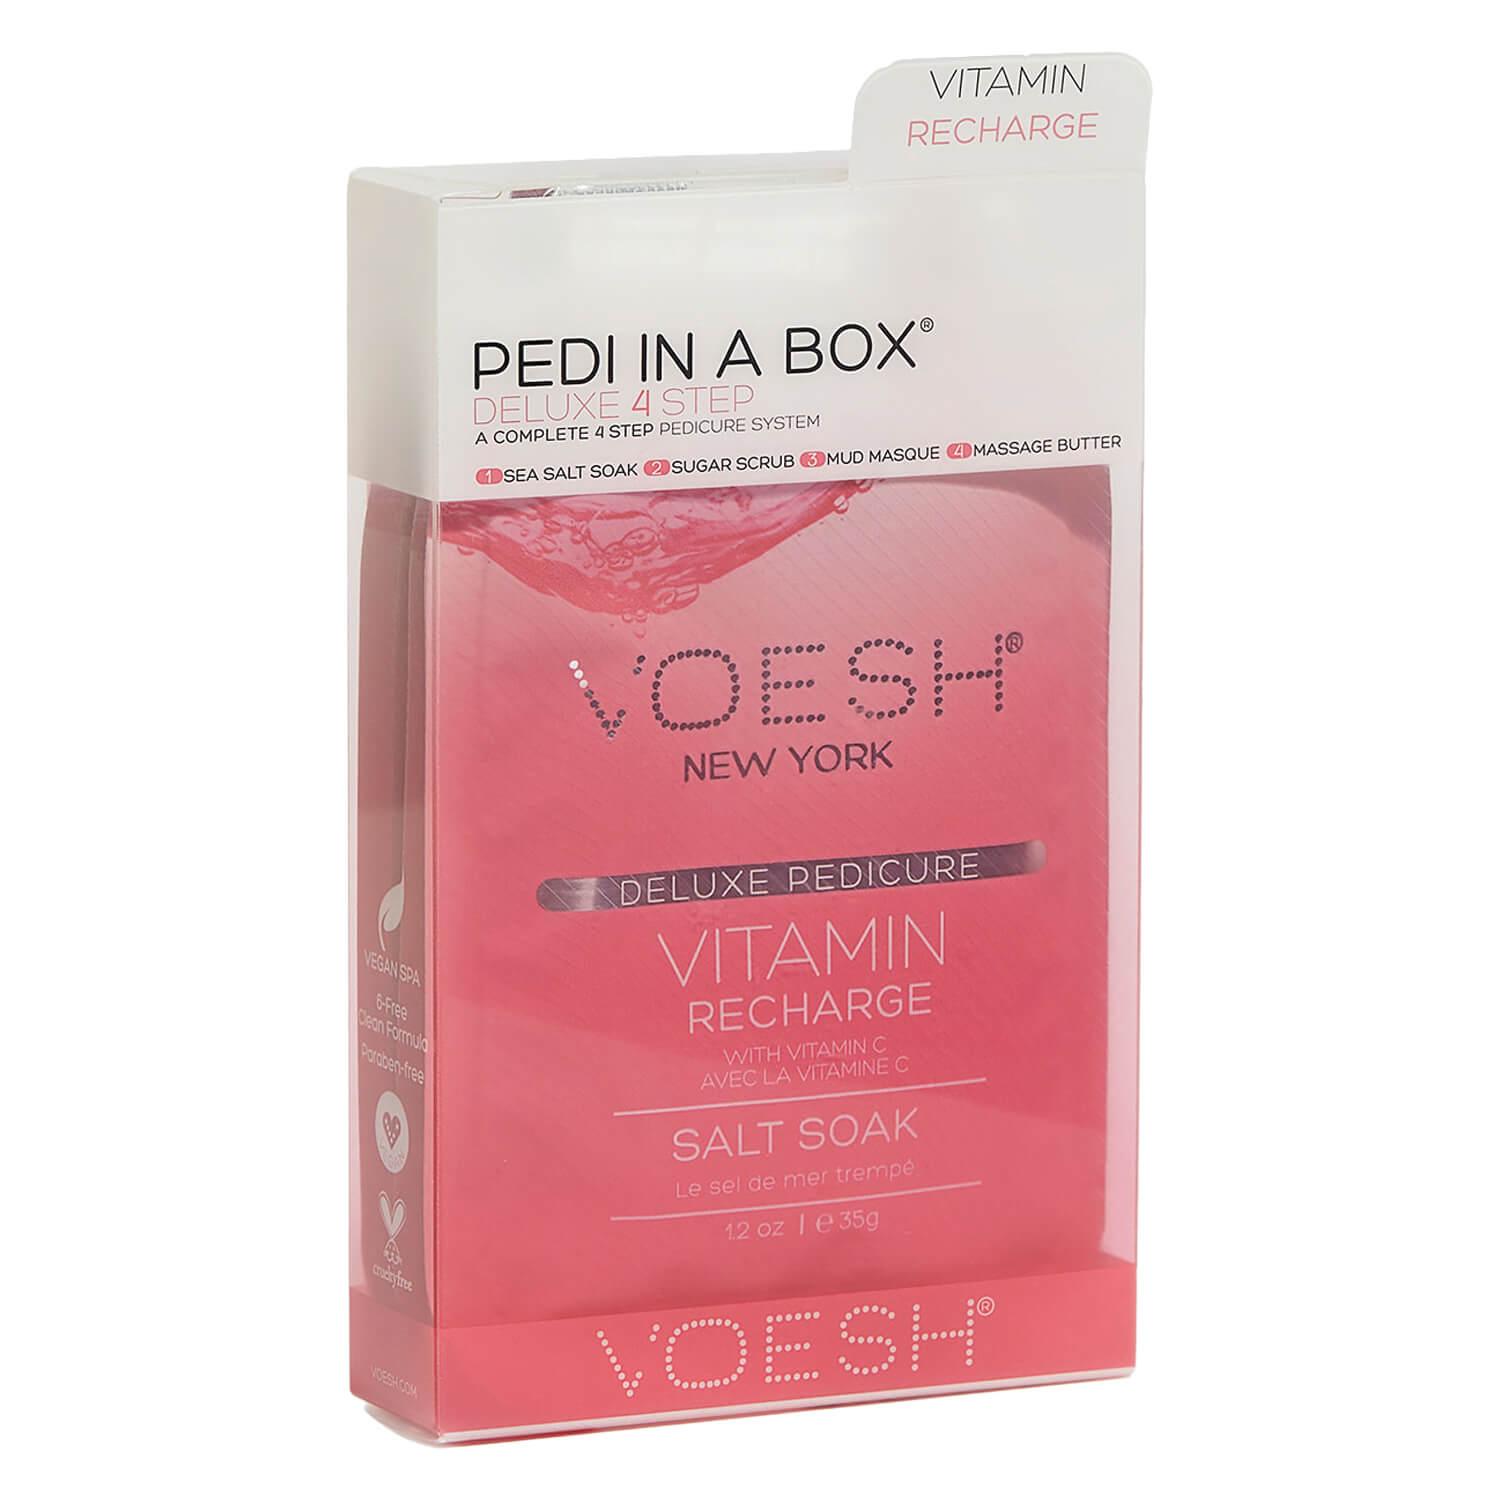 VOESH New York - Pedi In A Box 4 Step Vitamin Recharge